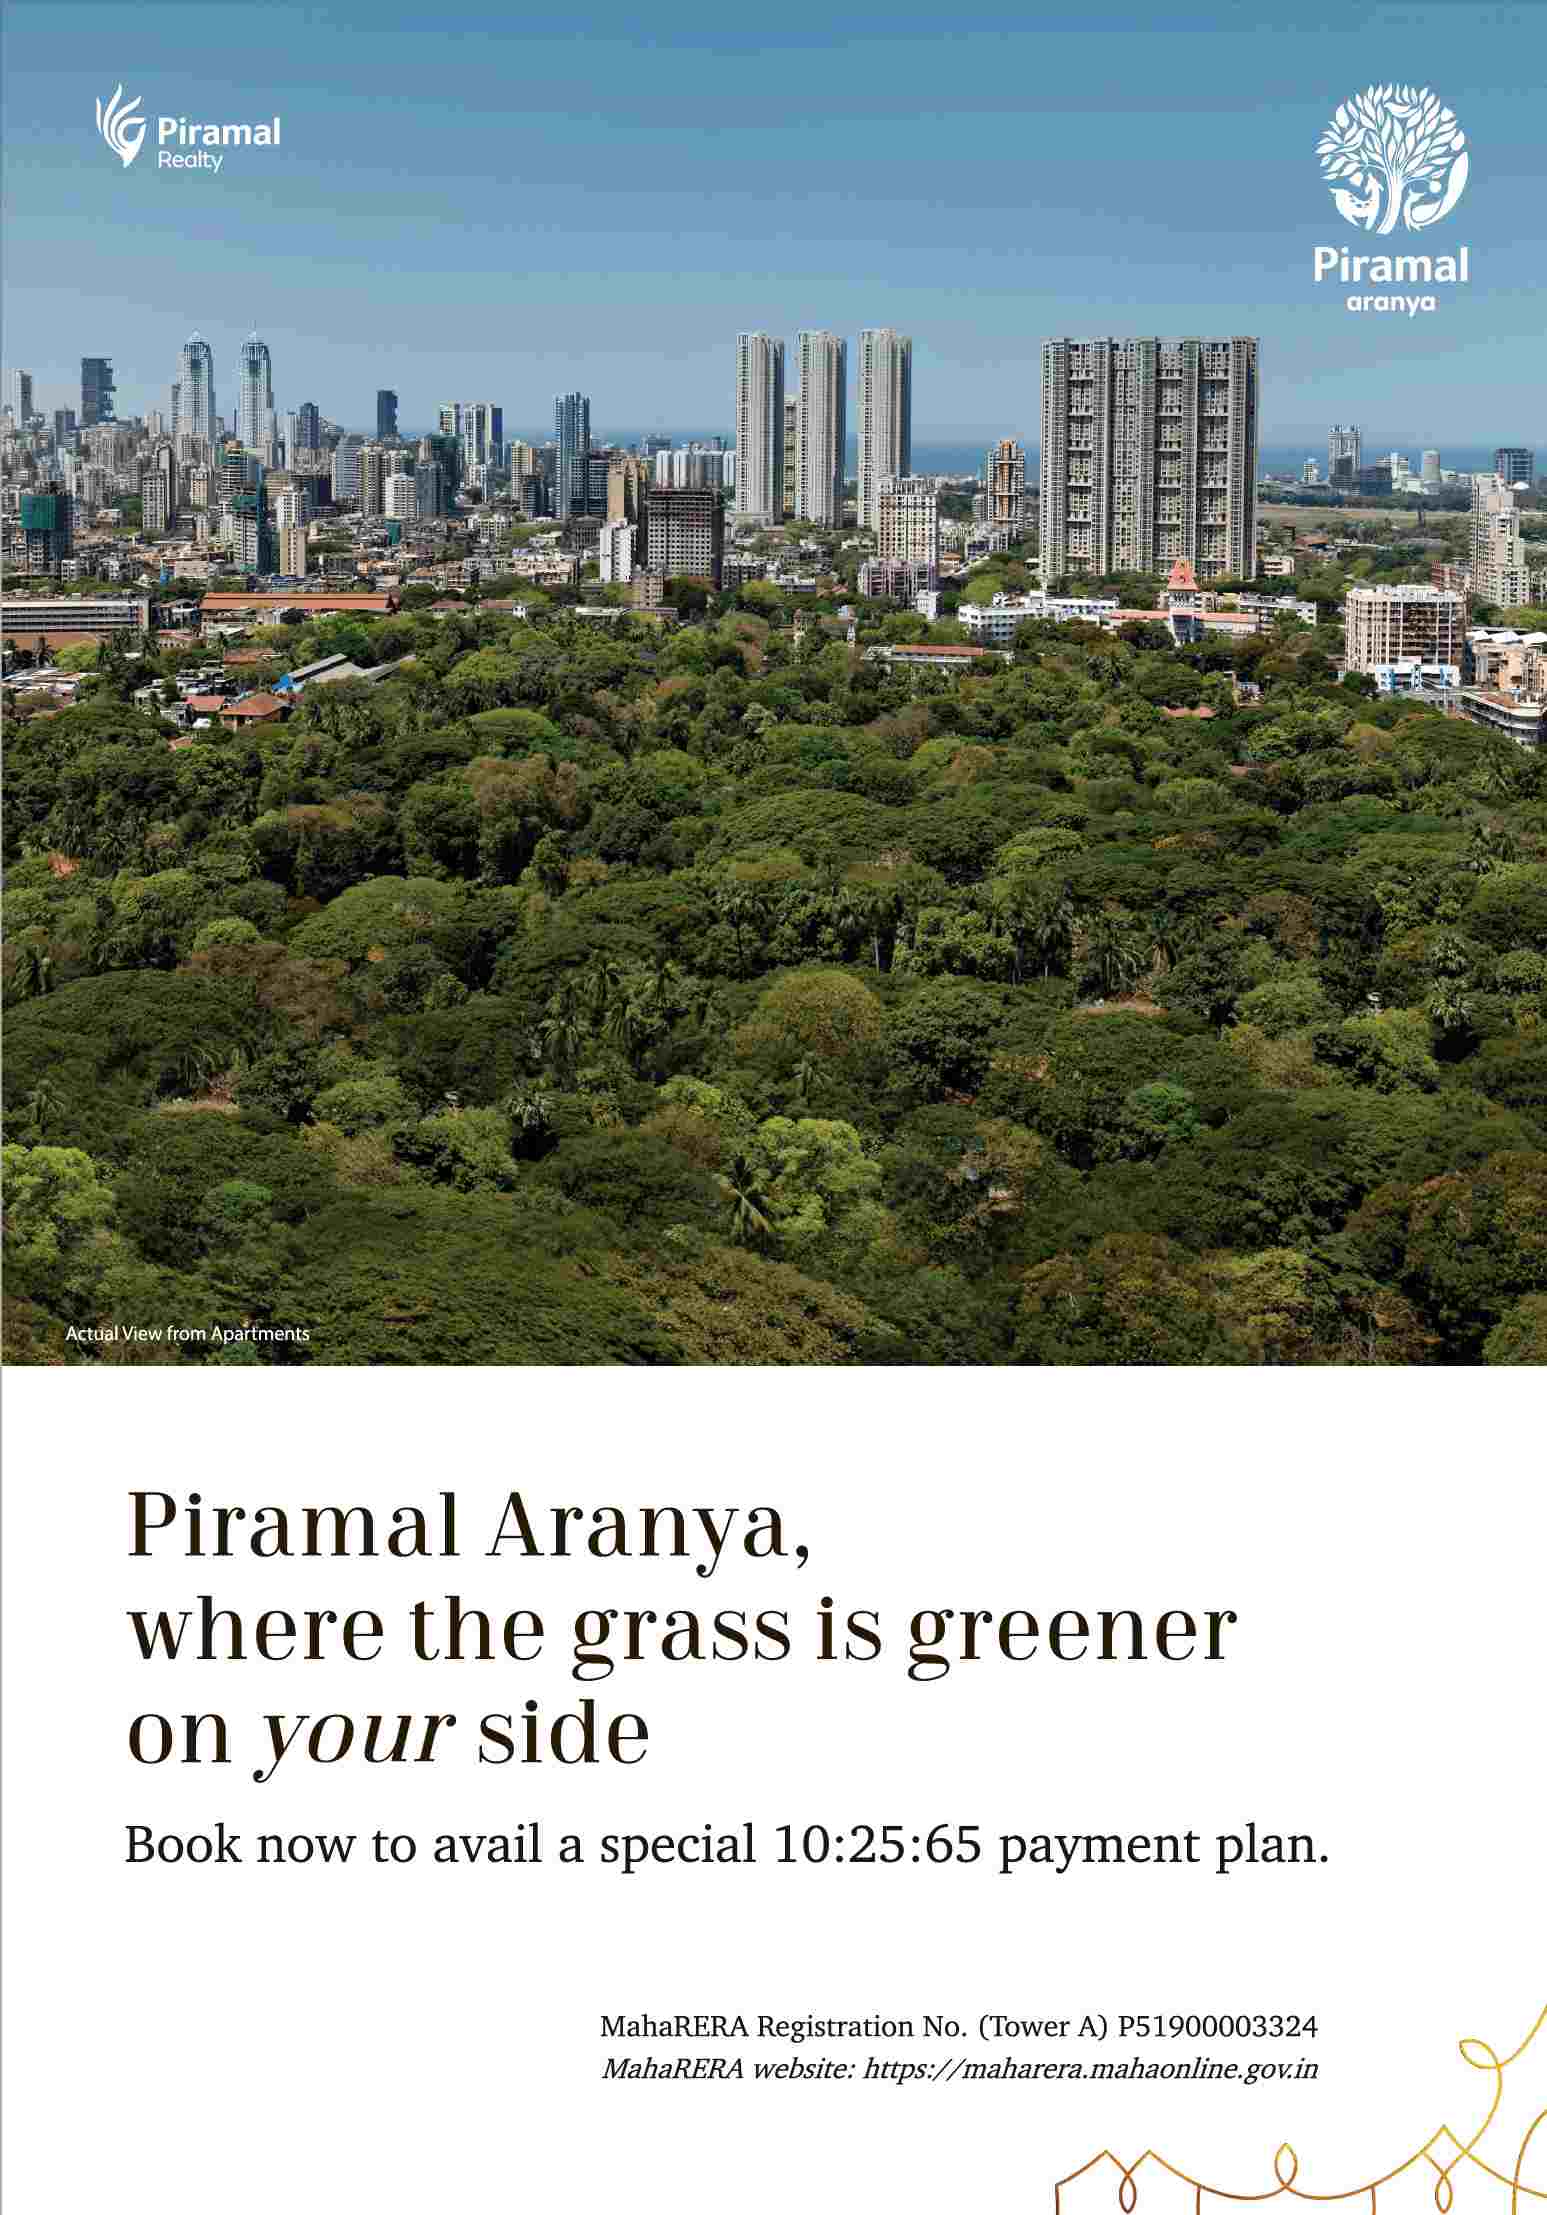 Book now to avail a special 10:25:65 payment plan at Piramal Aranya in Mumbai